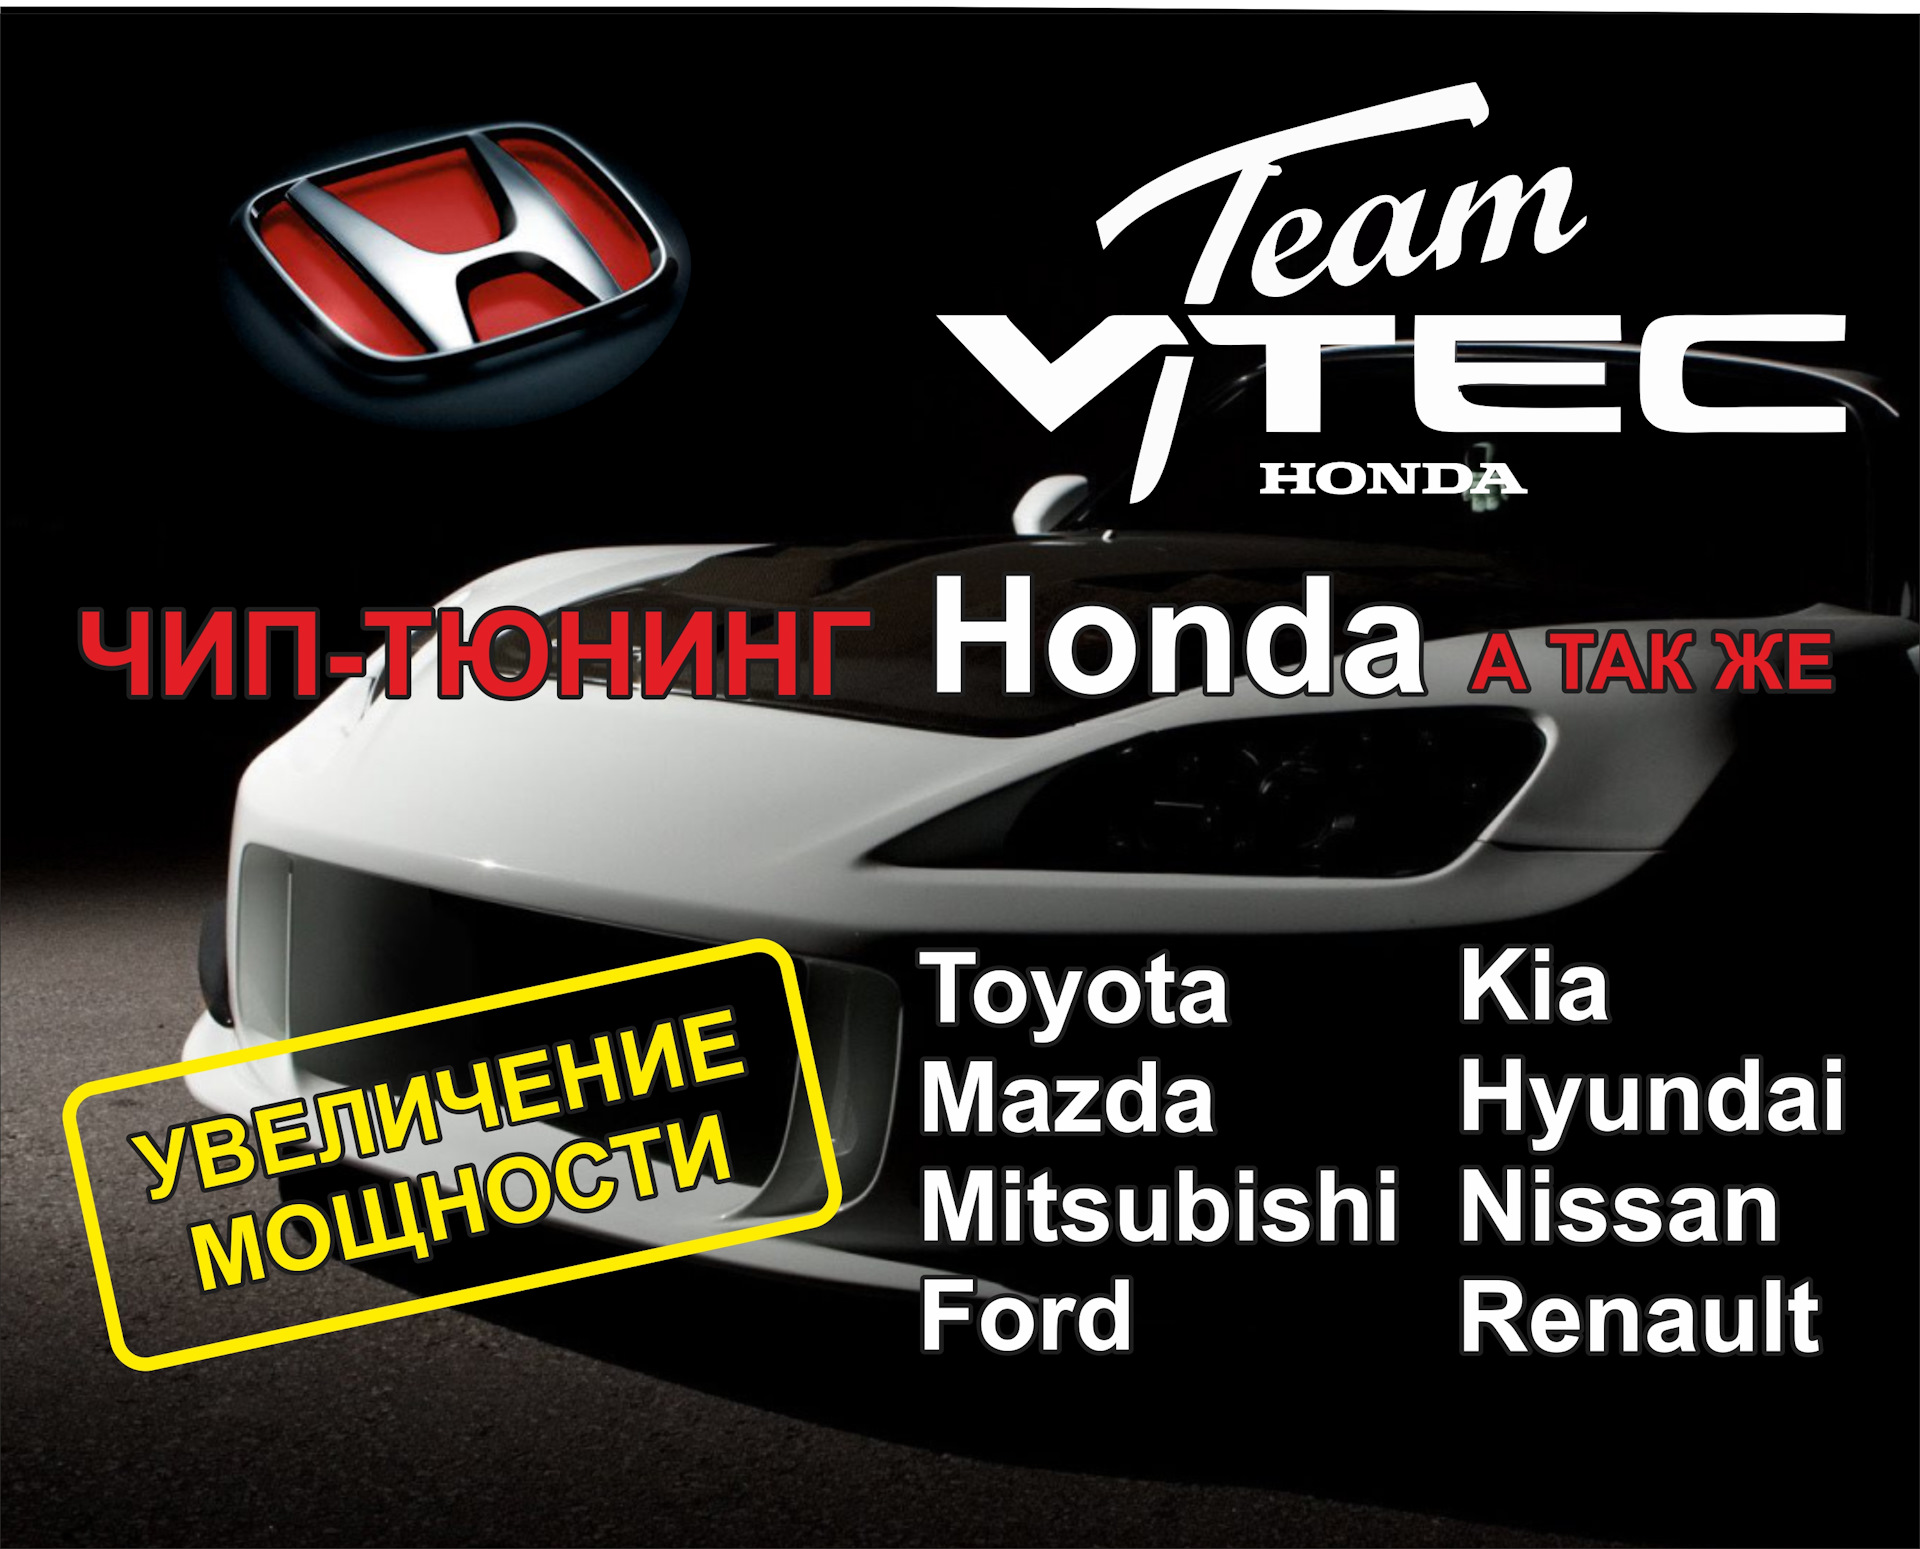 Honda чип. Тойота Хонда и Мазда. Toyota Nissan Honda Mazda. Team VTEC Honda.